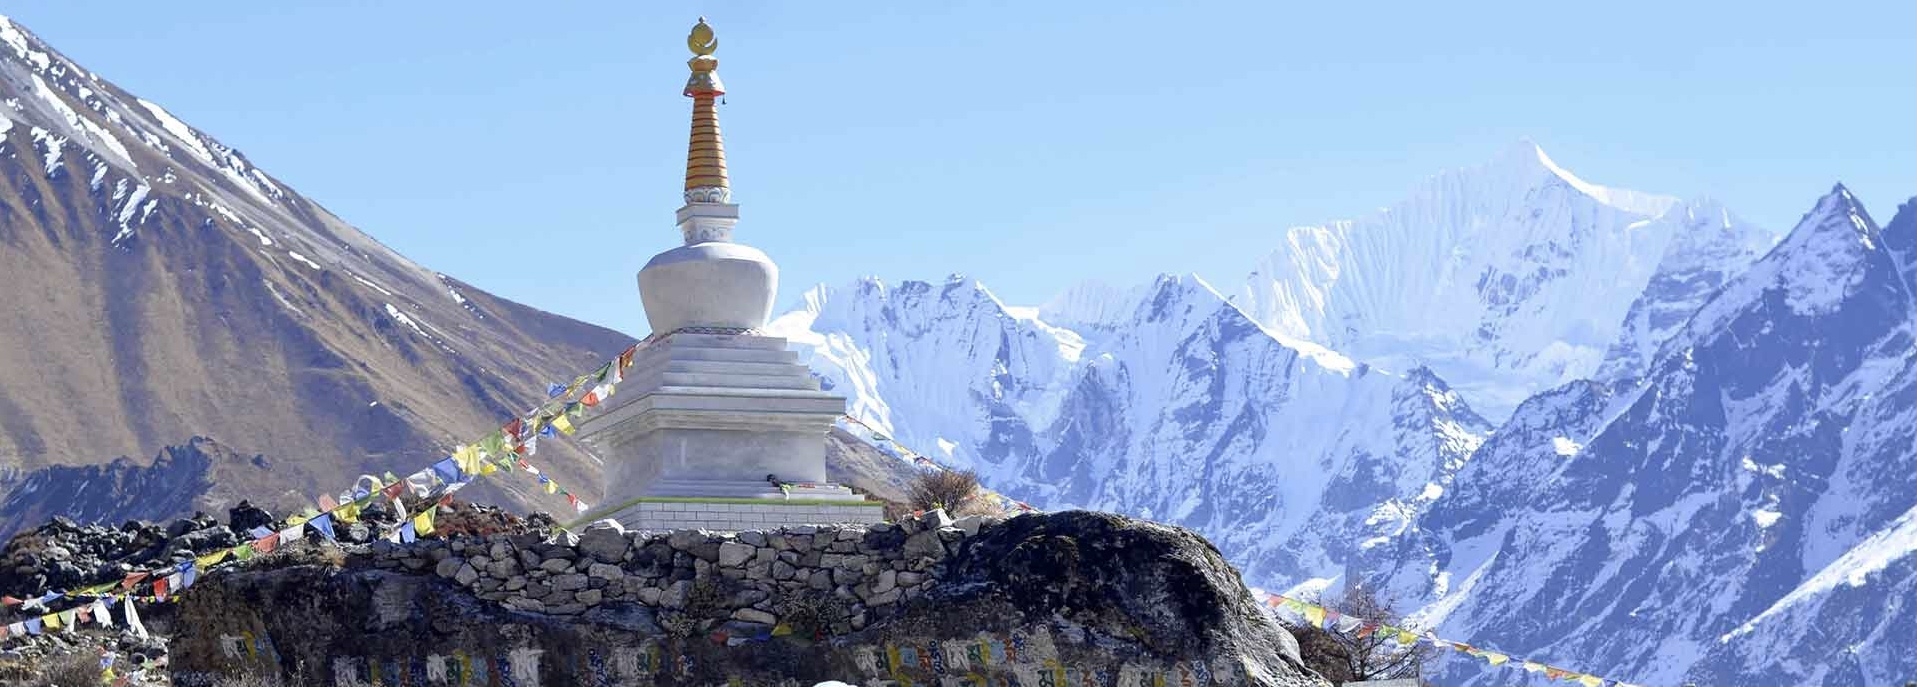 Langtang Valley Trekking | Langtang Valley Trek | Trek to Langtang Valley | Haven Holidays Nepal